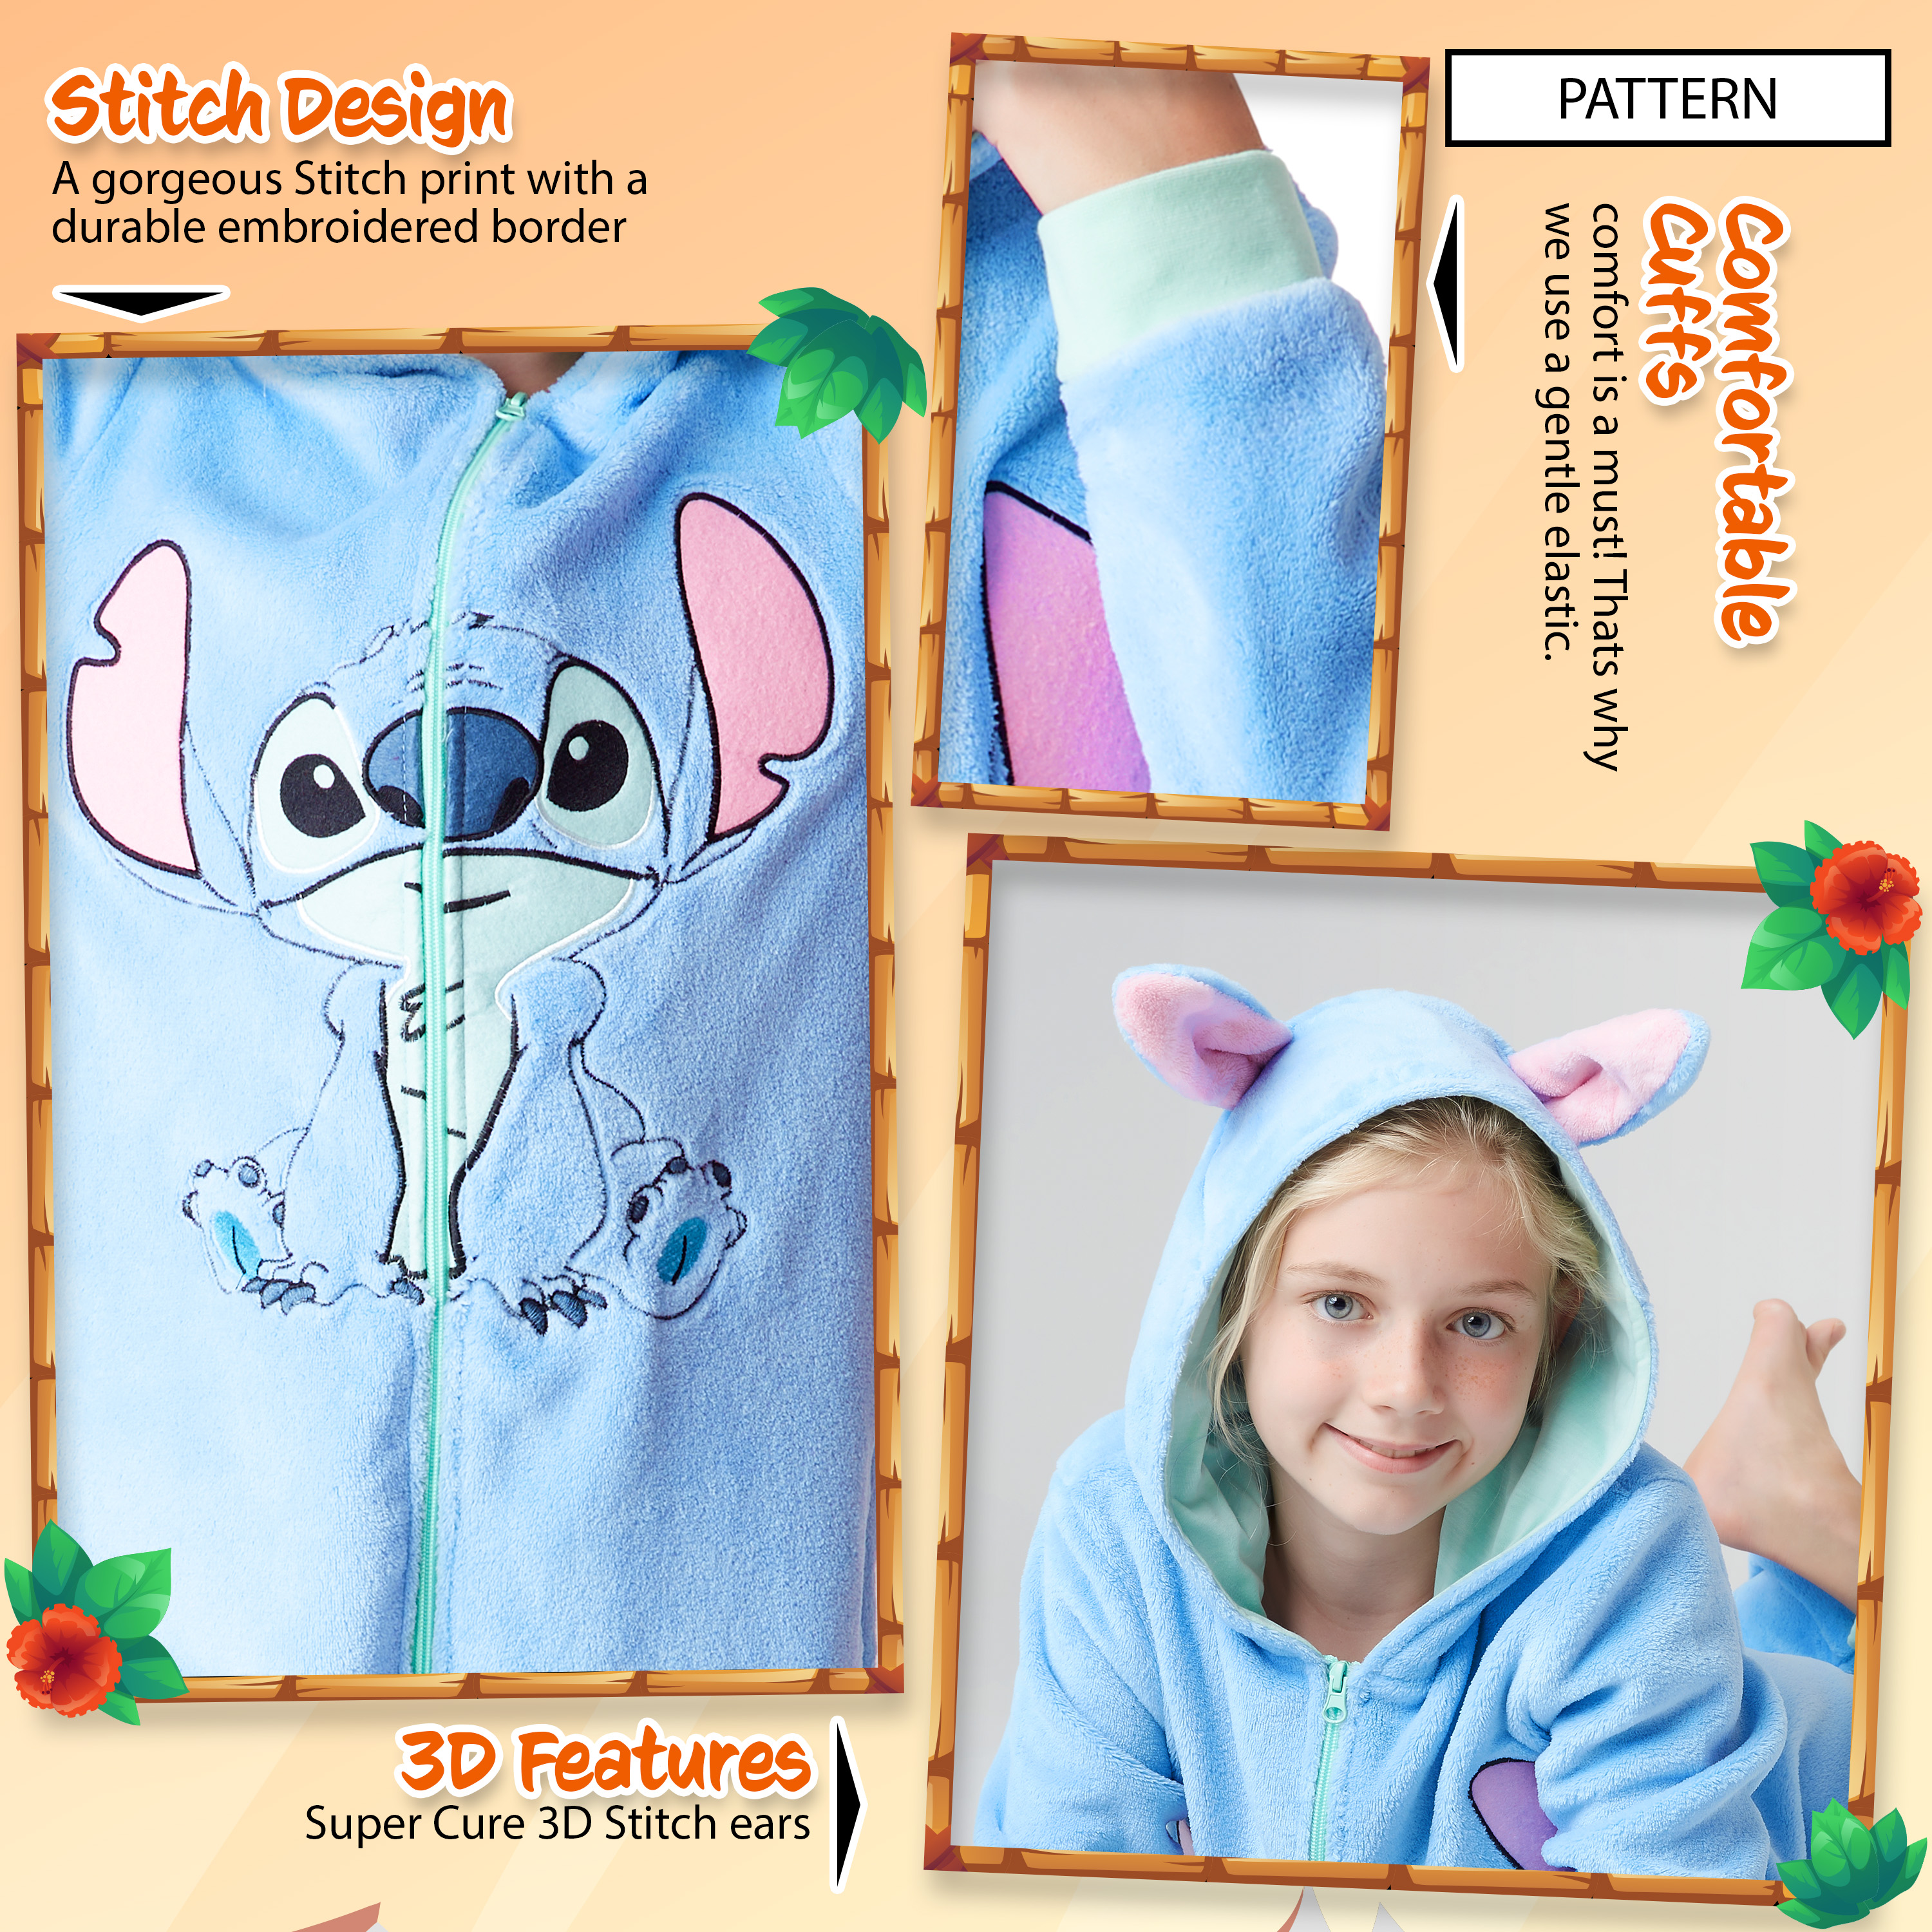 Pyjama Disney Stitch Bleu